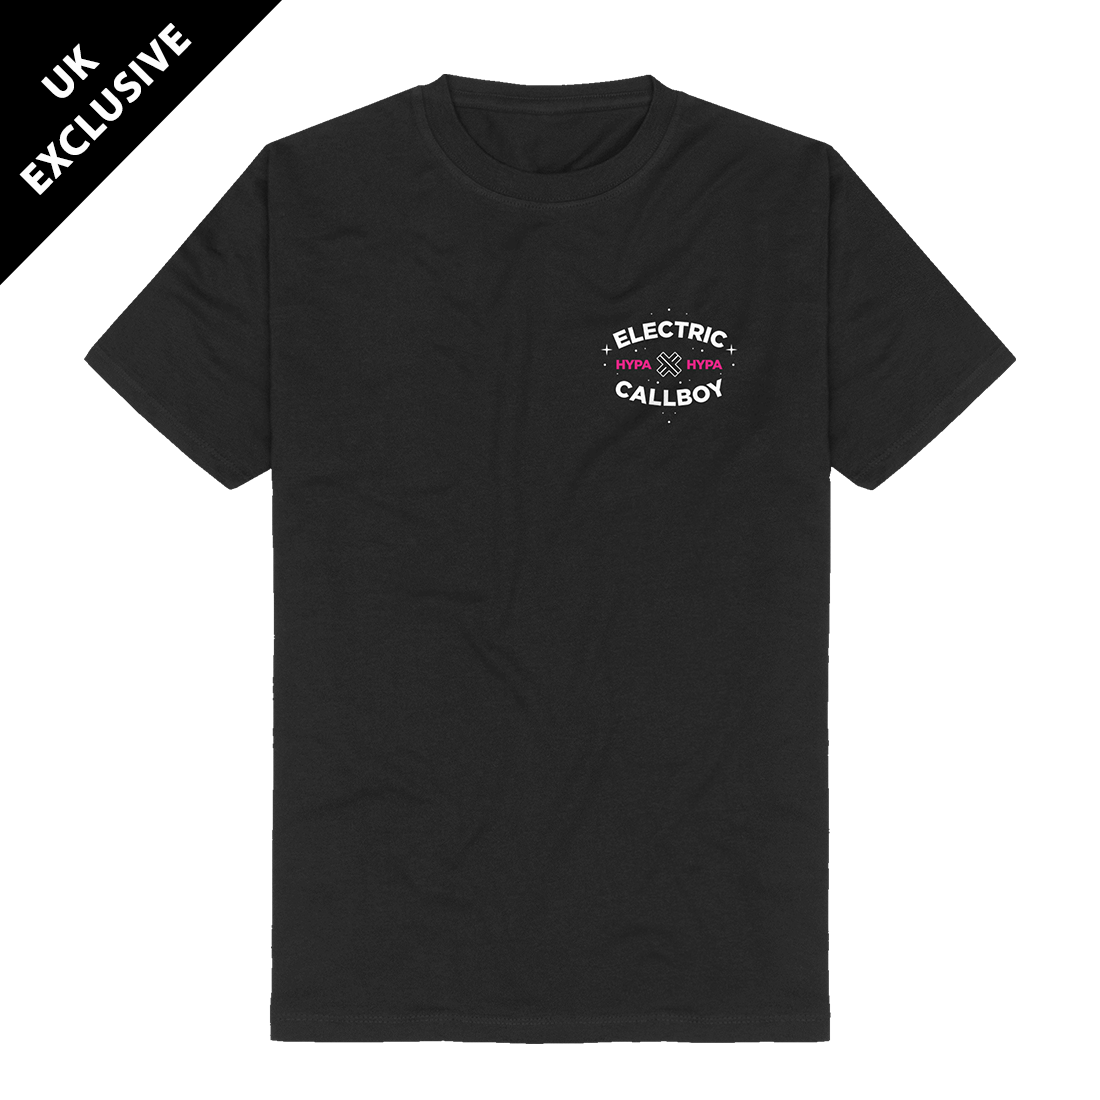 Electric Callboy - UK Exclusive Hypa Hypa Devil T-Shirt